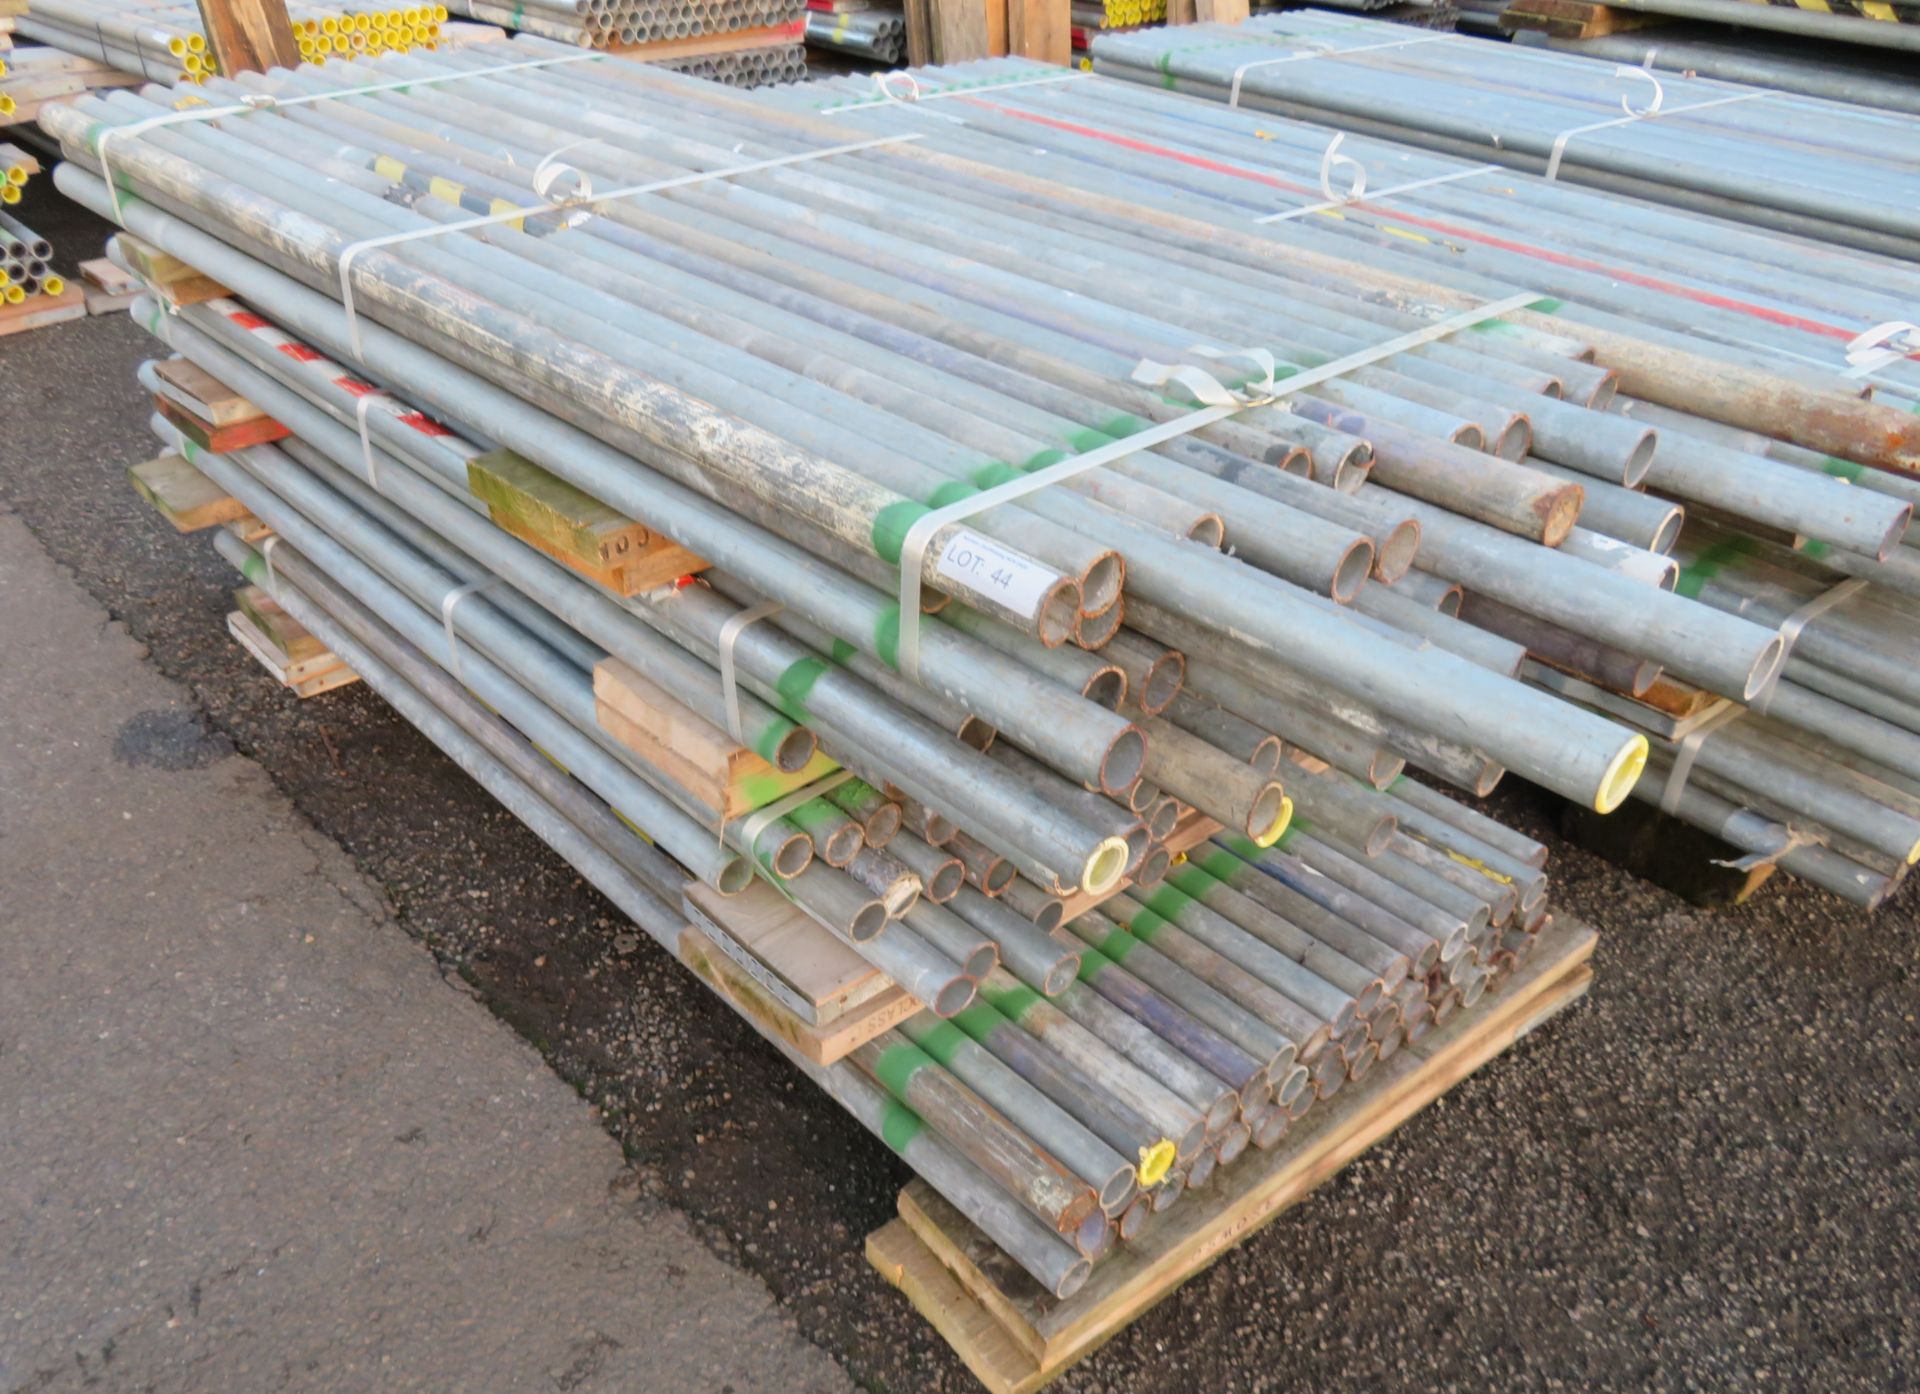 200x Various Length Galvanised Steel Scaffolding Poles. Lengths Range Between 7.5ft - 5ft. - Image 2 of 5